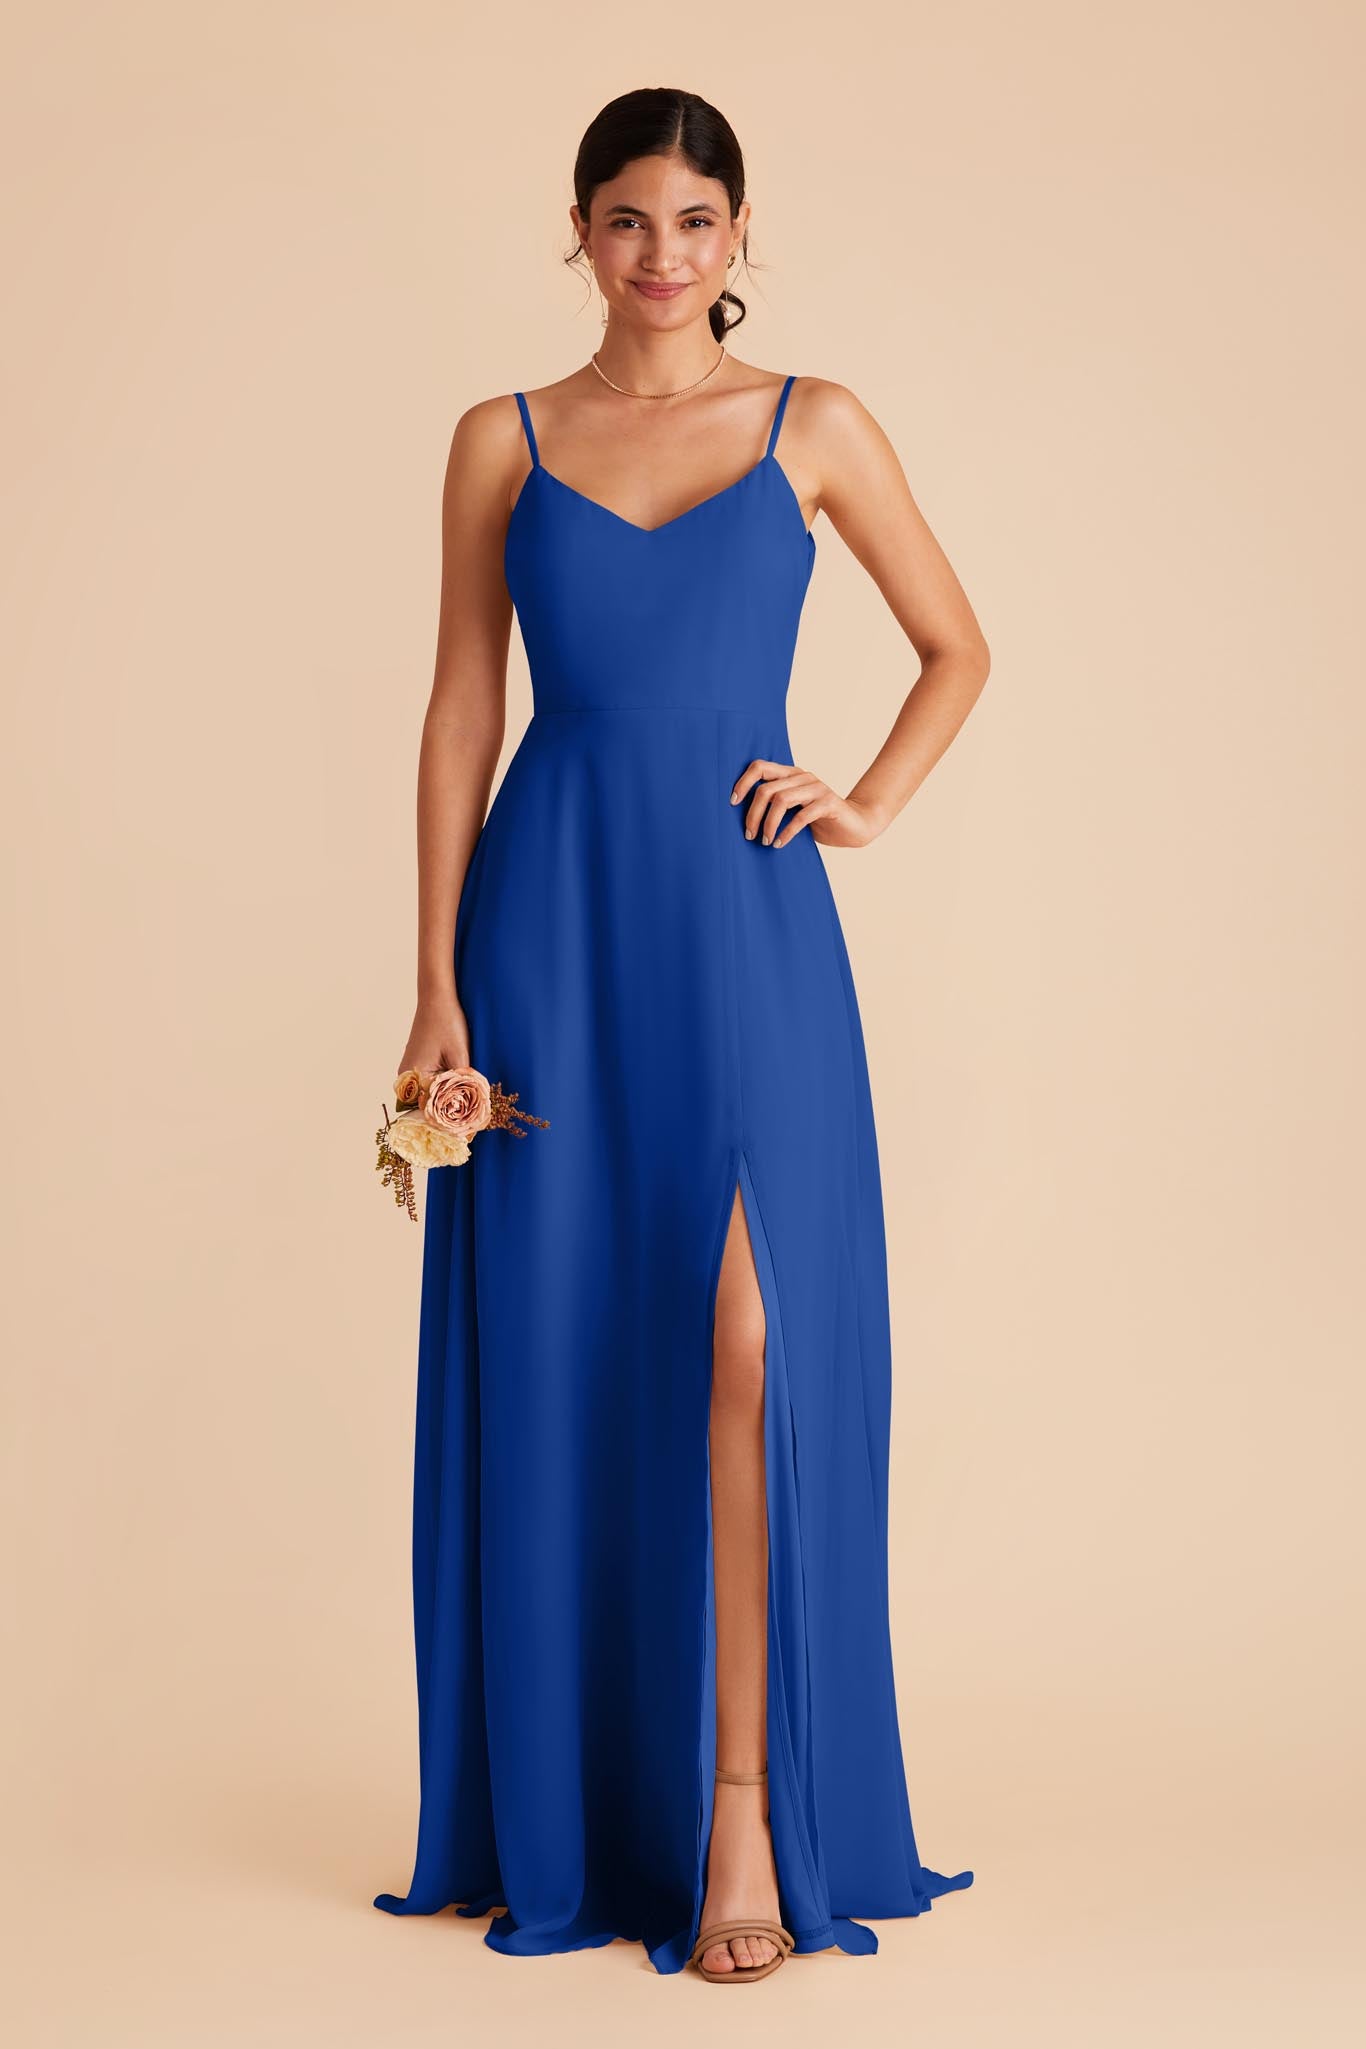 Cobalt Blue Devin Convertible Dress by Birdy Grey